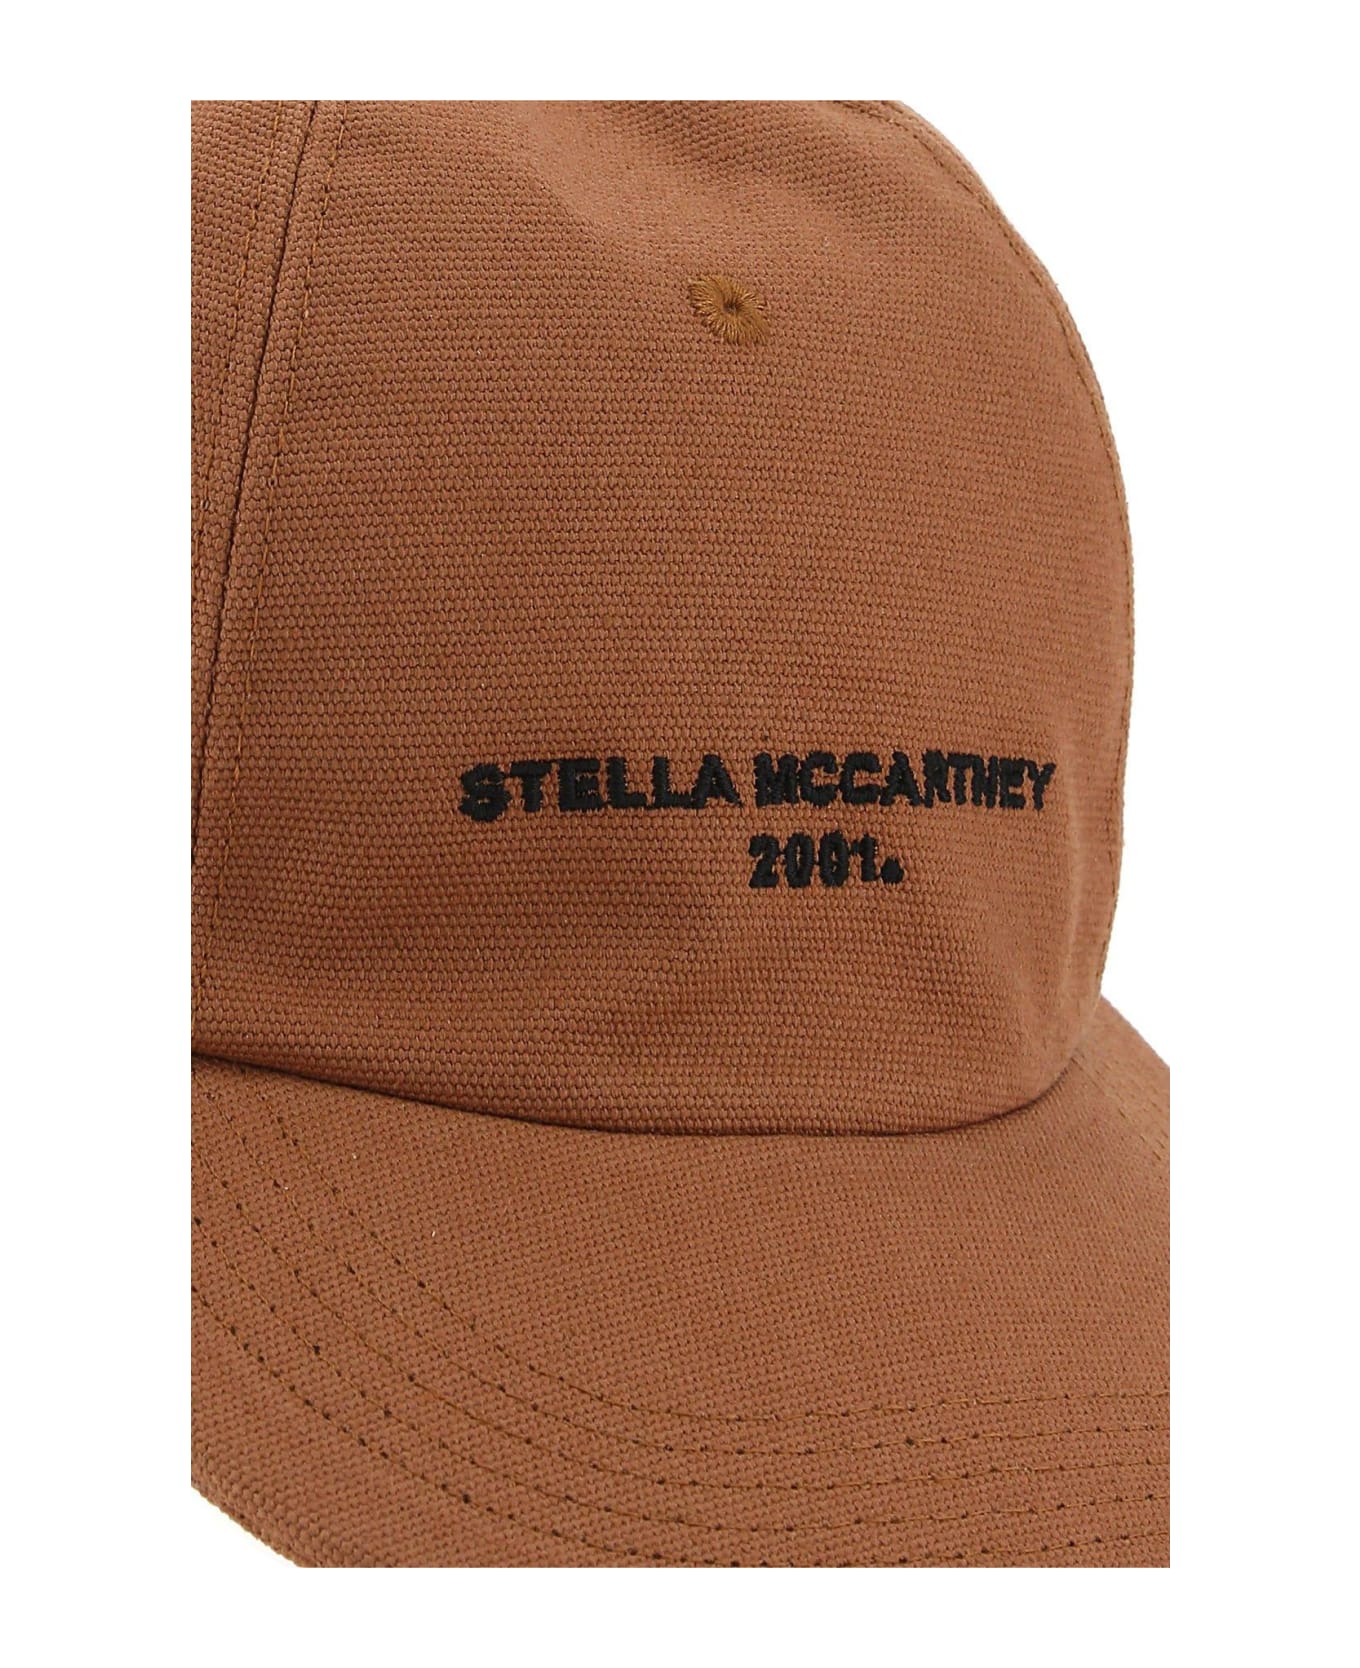 Stella McCartney Caramel Cotton Blend Baseball Cap - Brown